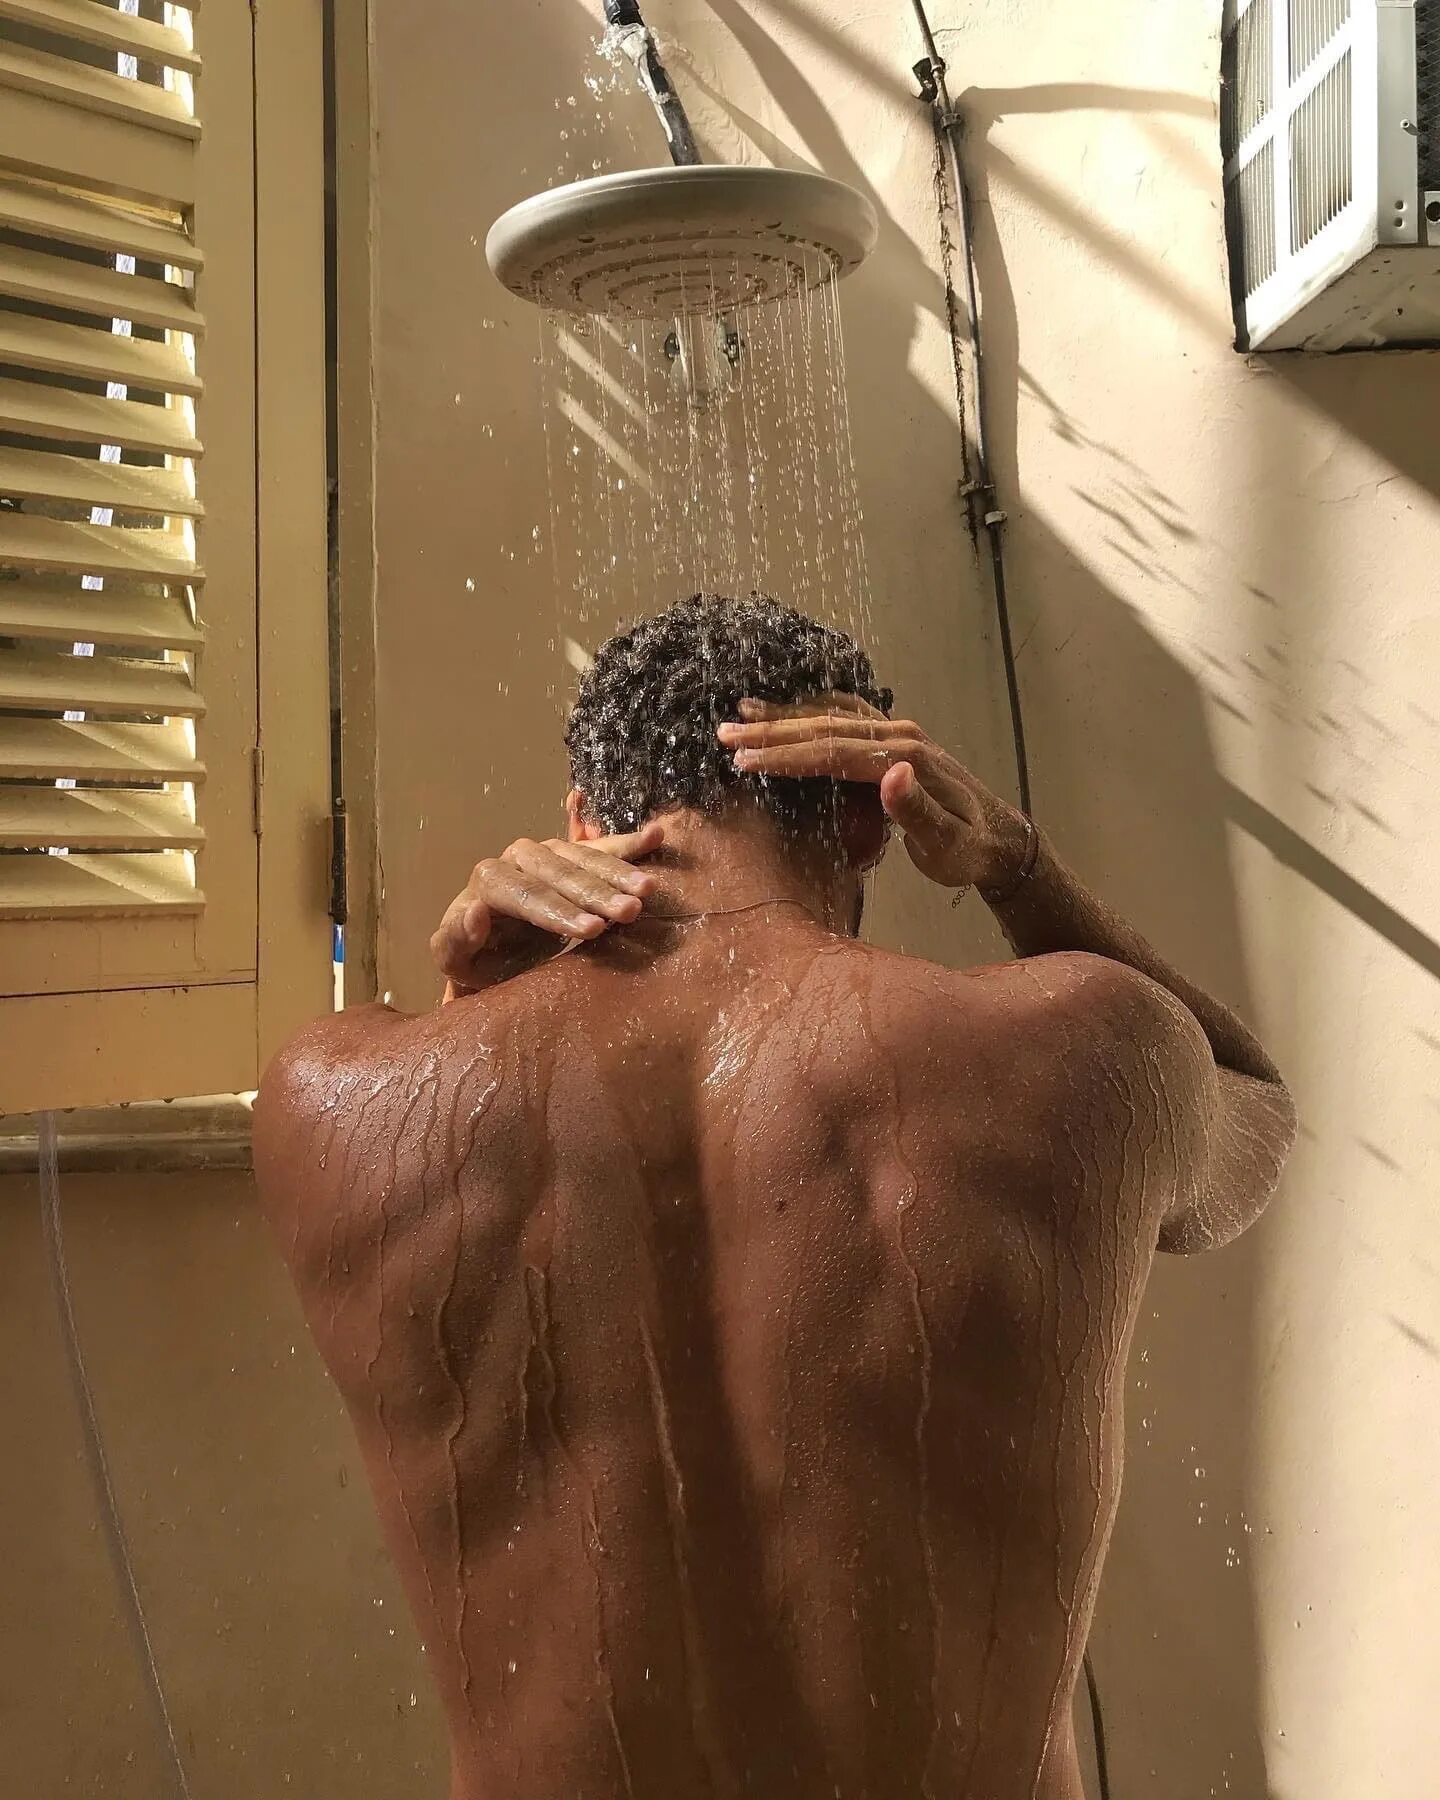 Мужики в душе видео. Public bano Shower Mens.